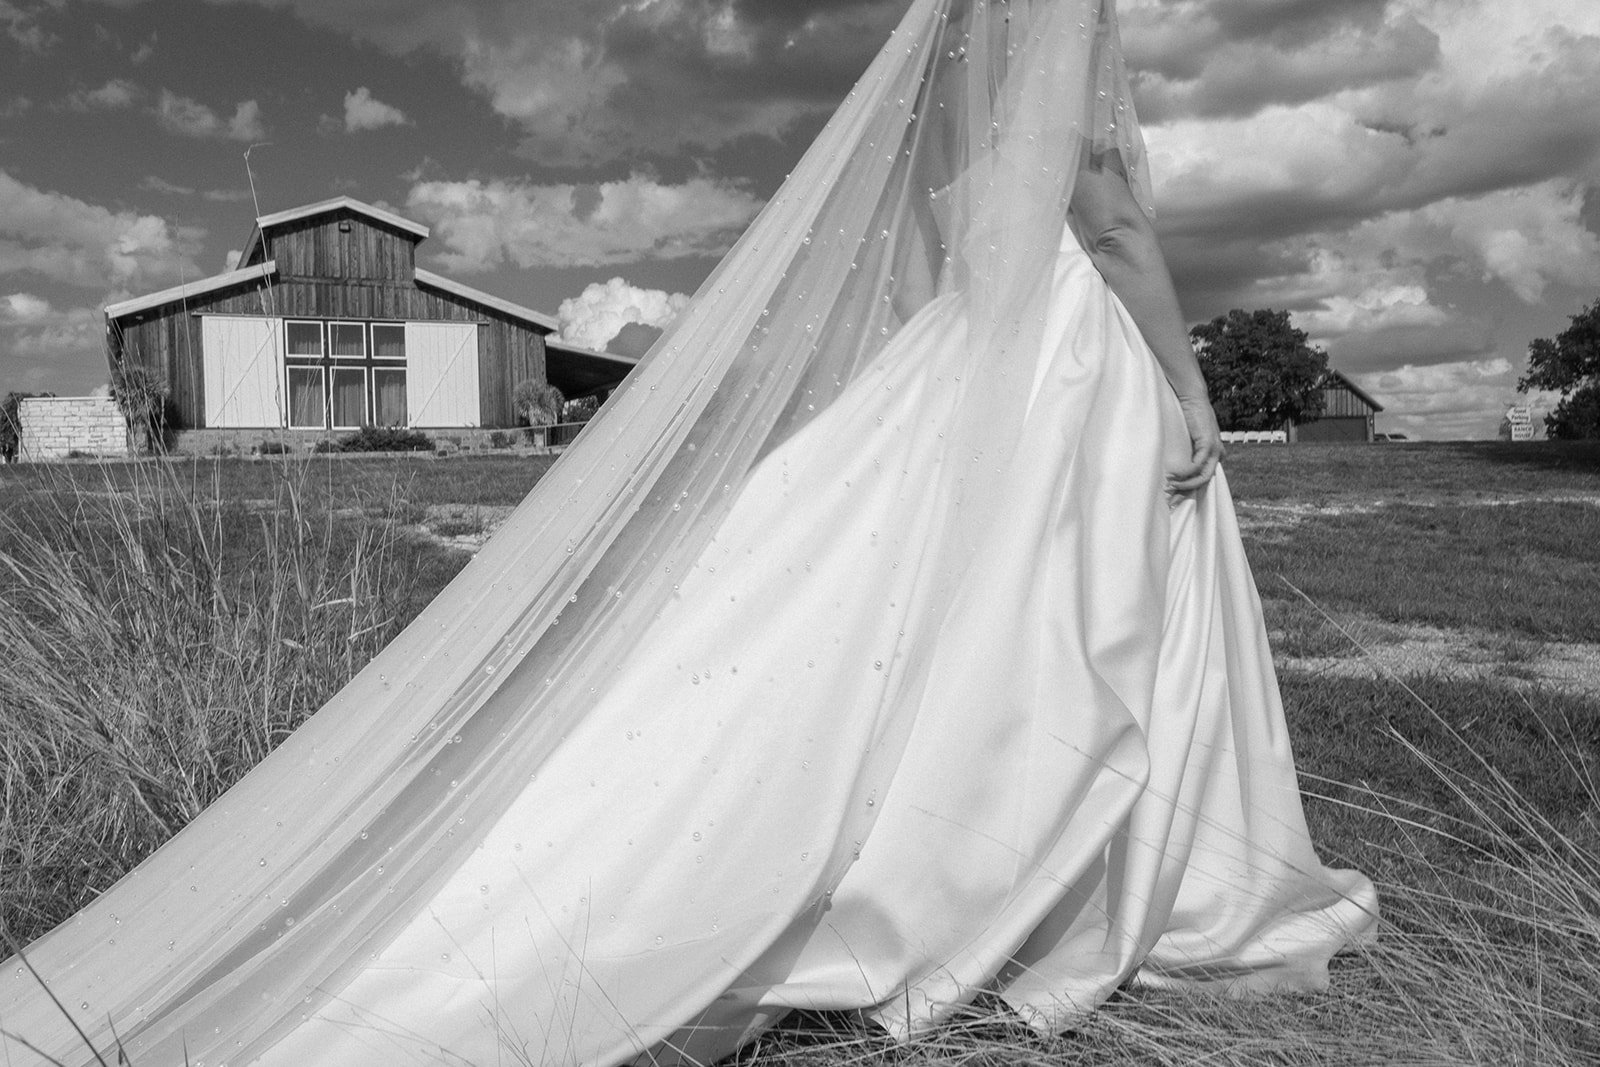 A Modern Barn Wedding Venue Camp Hideaway in TX - Texas Wedding Photography - Natalie Nicole Photo (20).jpg